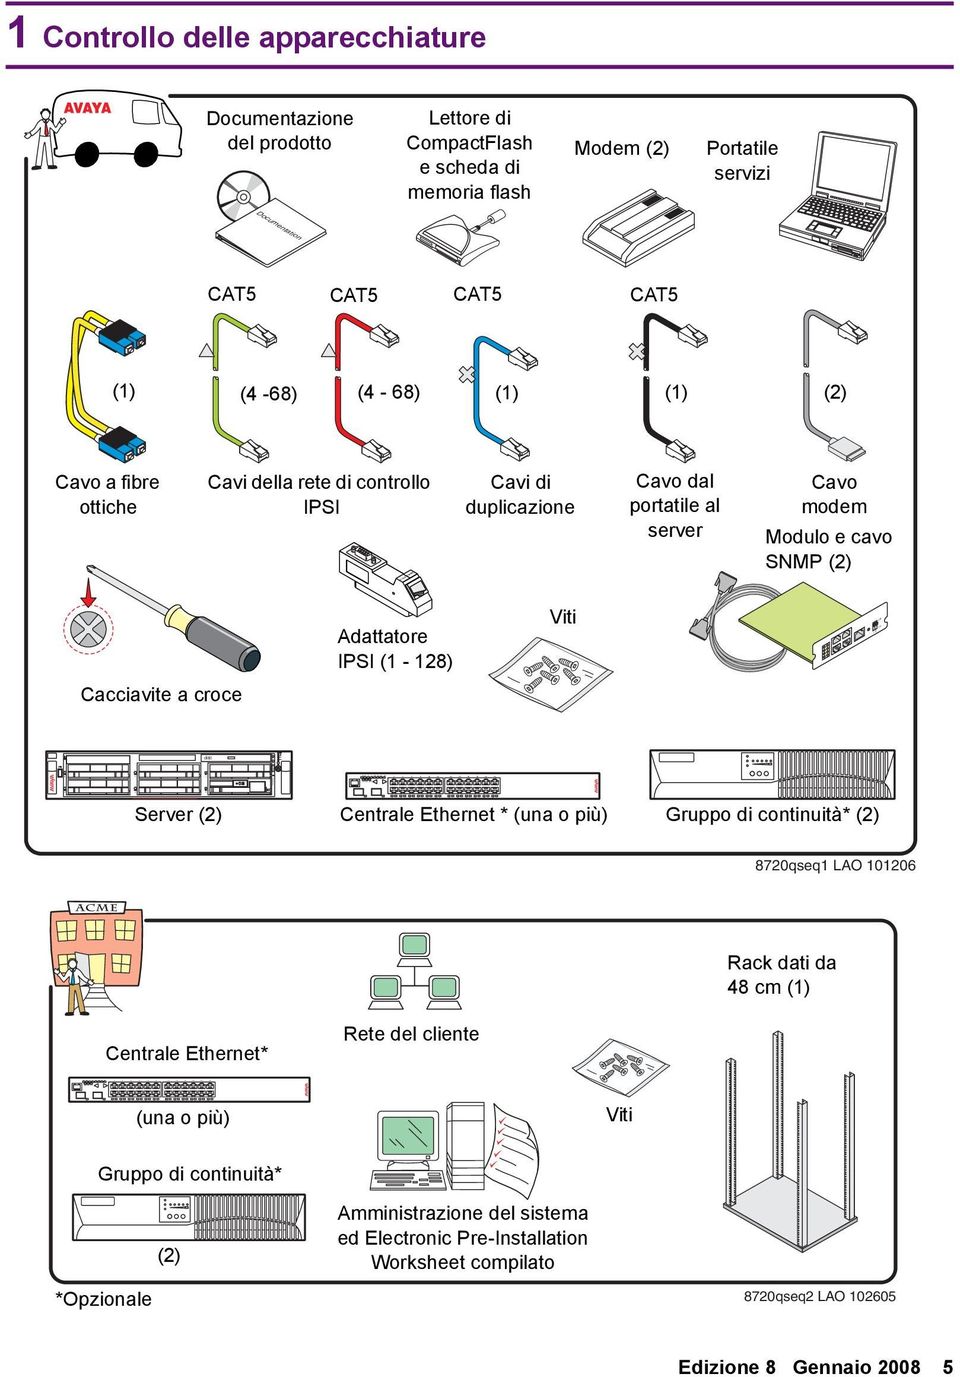 Cavi di duplicazione Cavo dal portatile al server Cavo modem Modulo e cavo SNMP () Adattatore IPSI ( - 8) Viti Cacciavite a croce Simplex Duplex c h c h Server () Centrale Ethernet * (una o più)